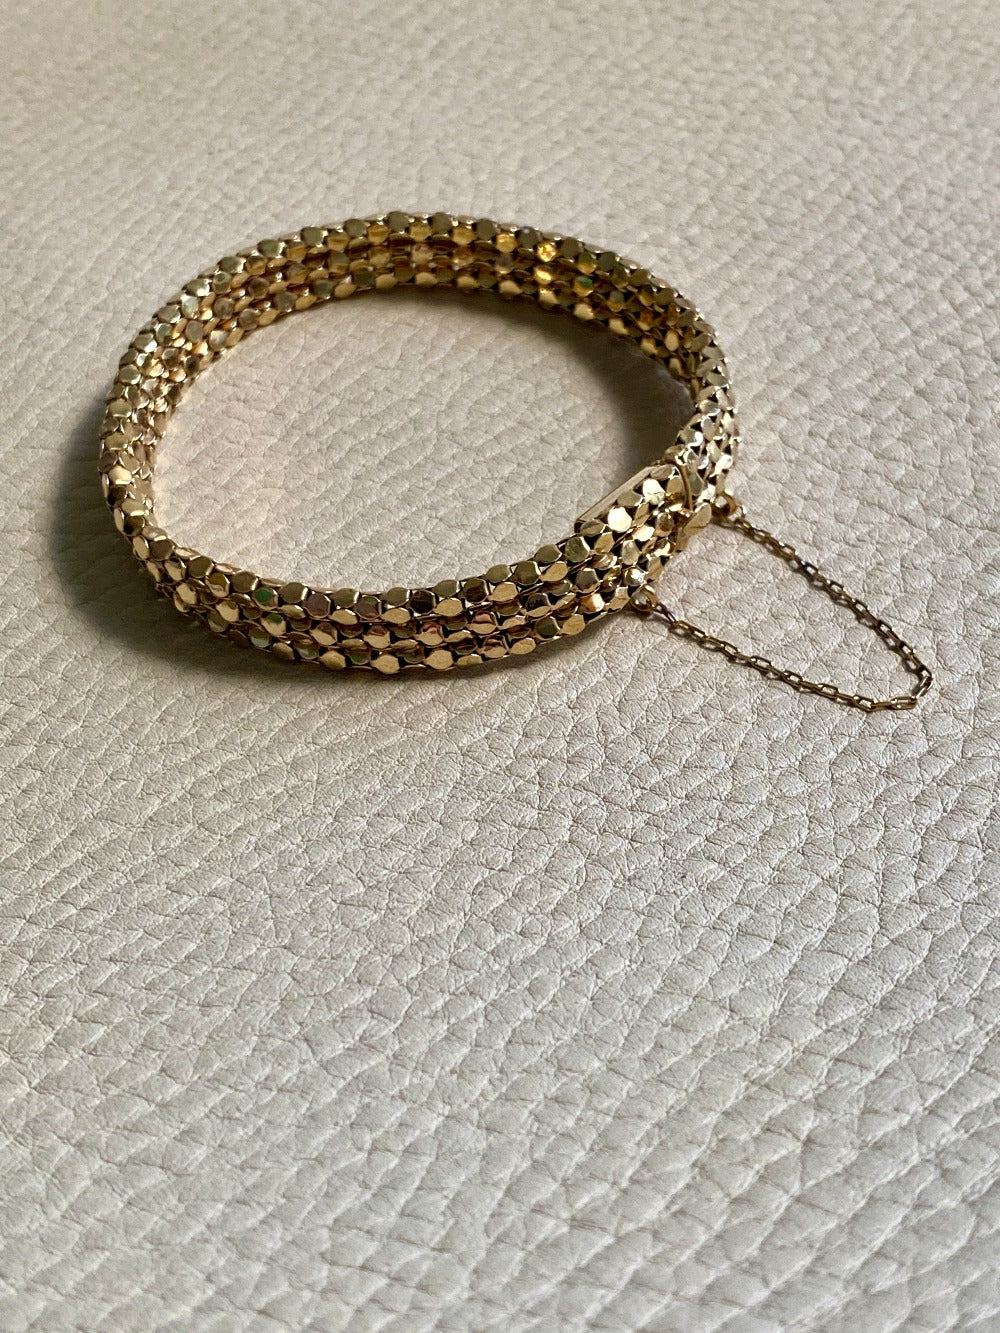 Honeycomb link triple strand bracelet - 18k gold - 7 inch length